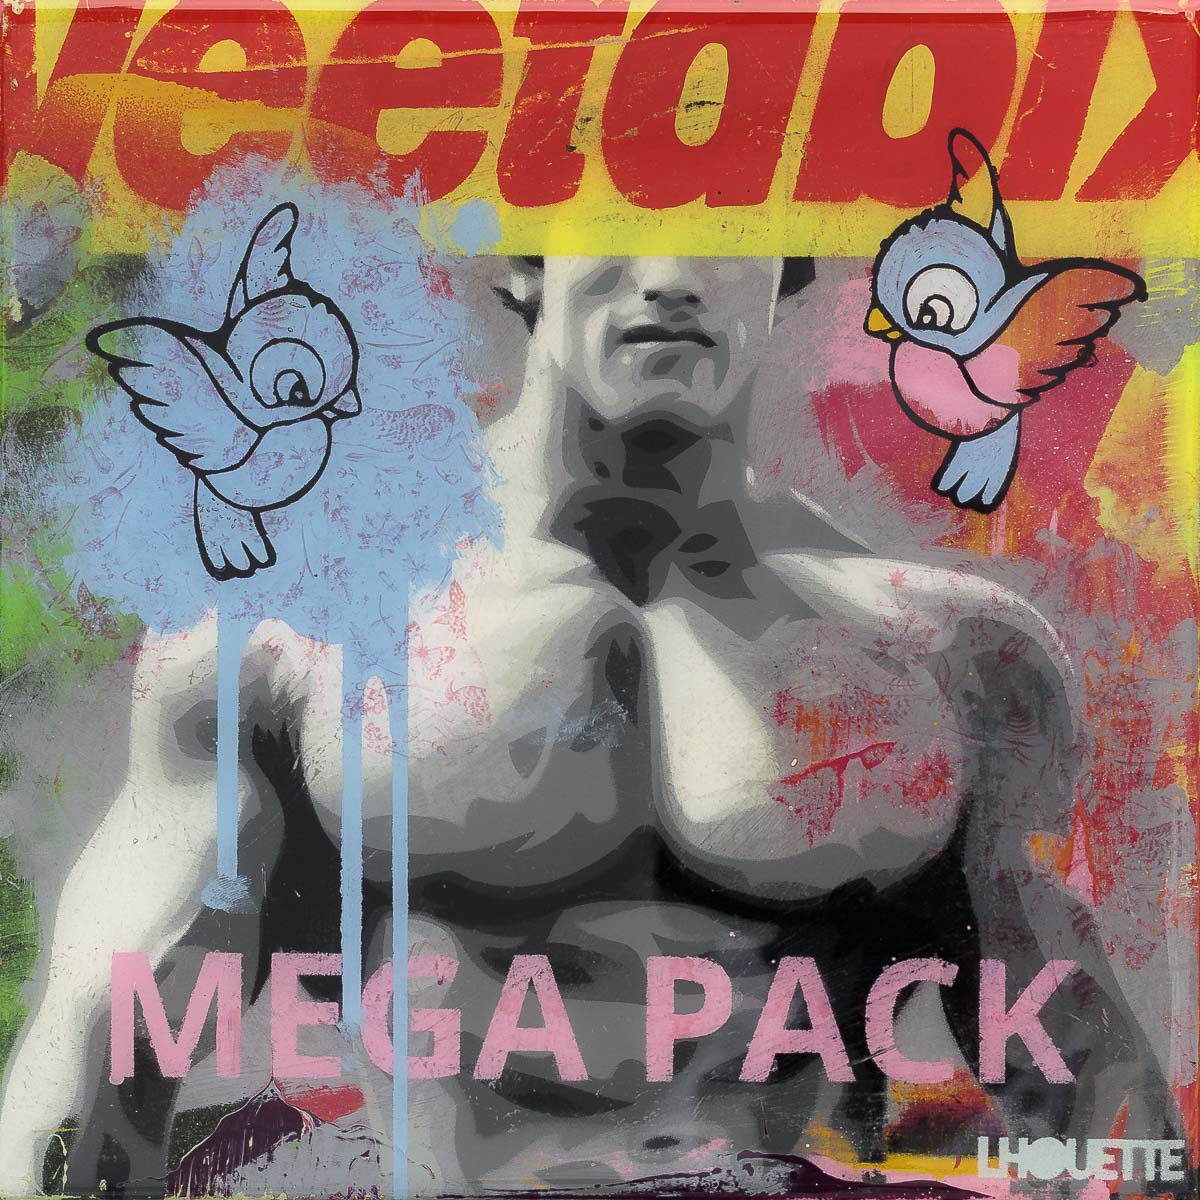 Mega Pack - Miniature Pop Panel - Original Lhouette Original